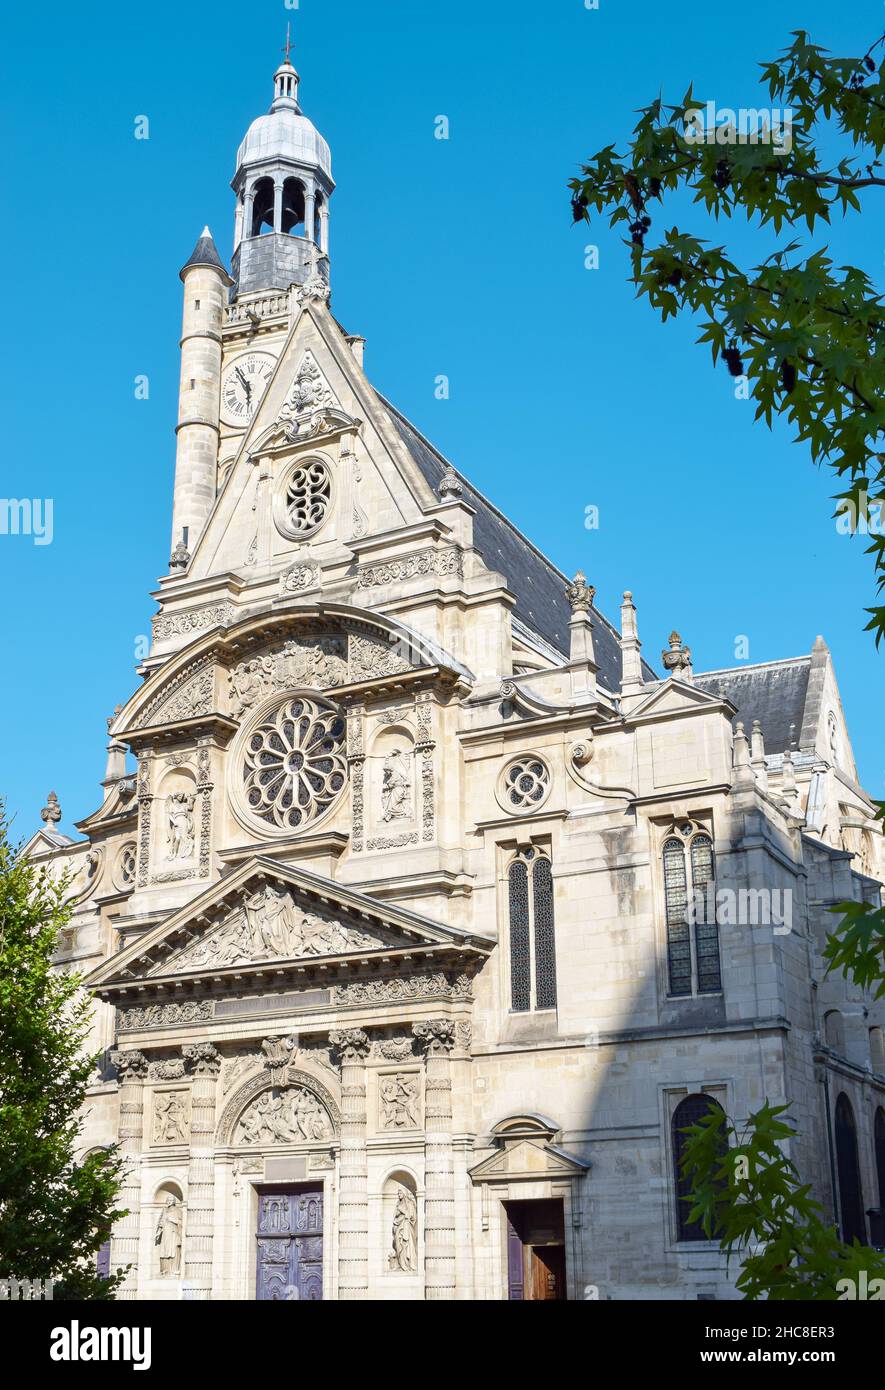 Fachada iglesia de Saint Etienne du Mont de estilo gótico flamígero siglo XV en Paris, Francia.JPG Banque D'Images